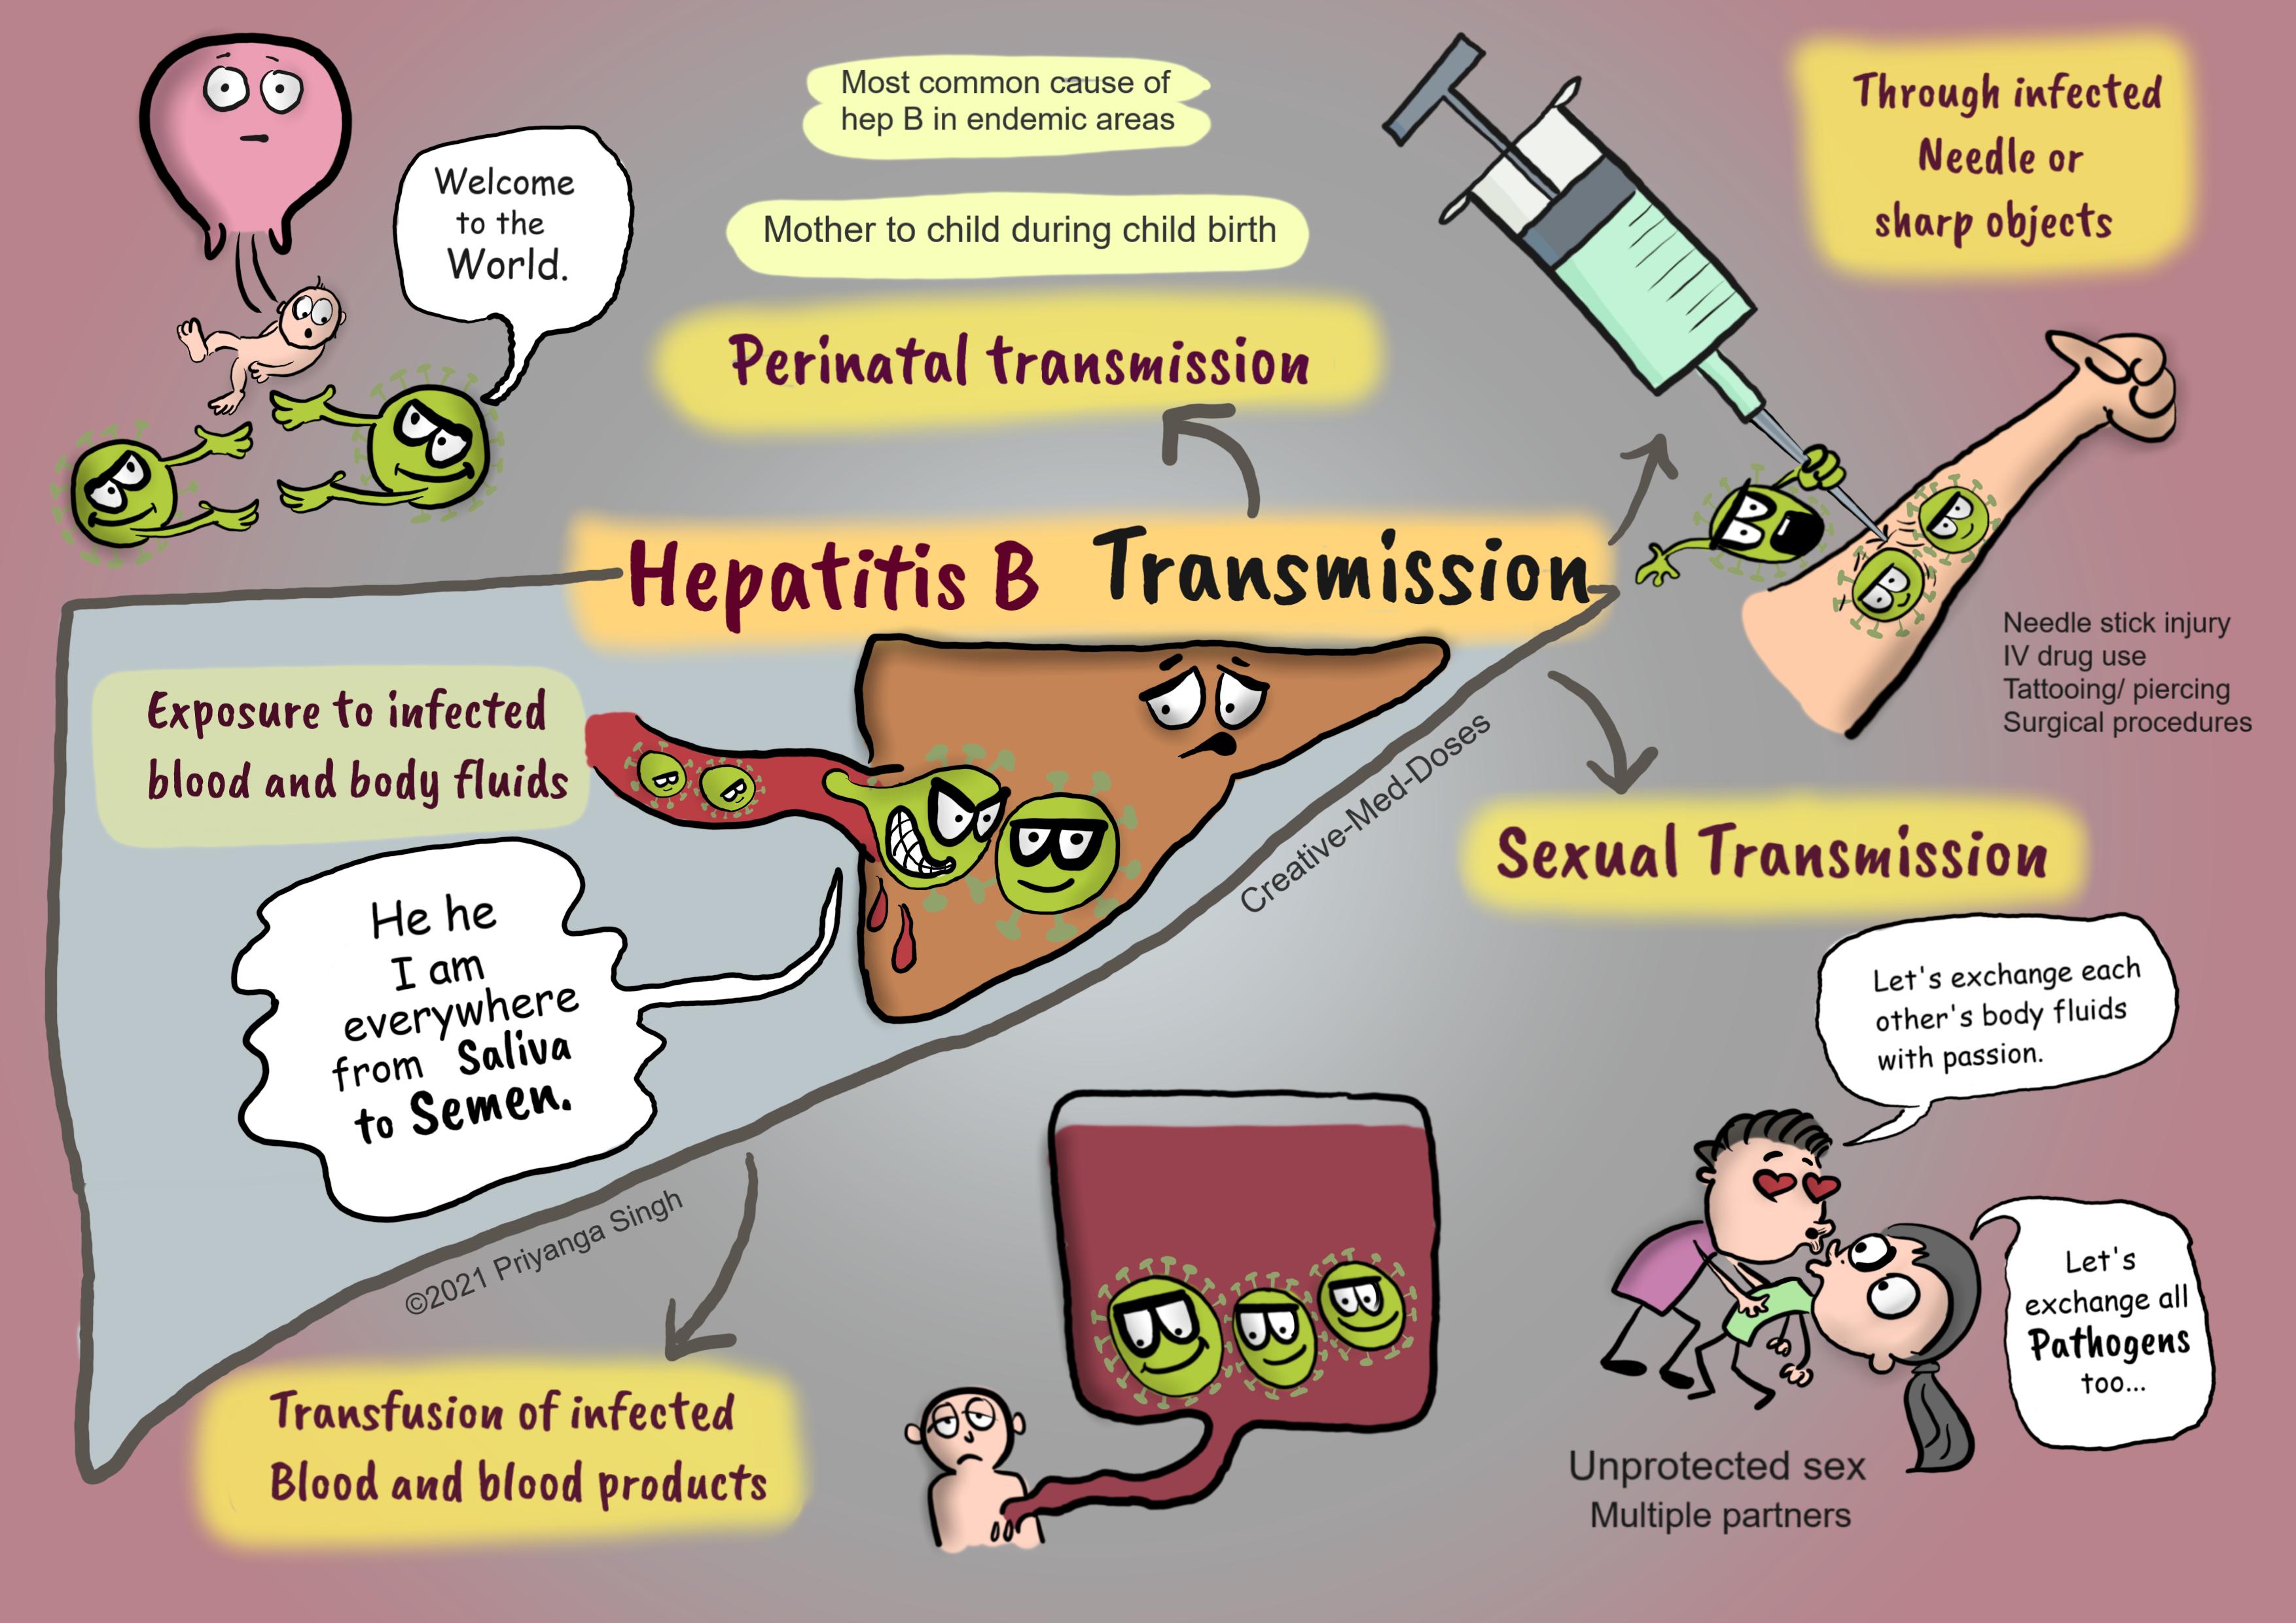 presentation on hepatitis